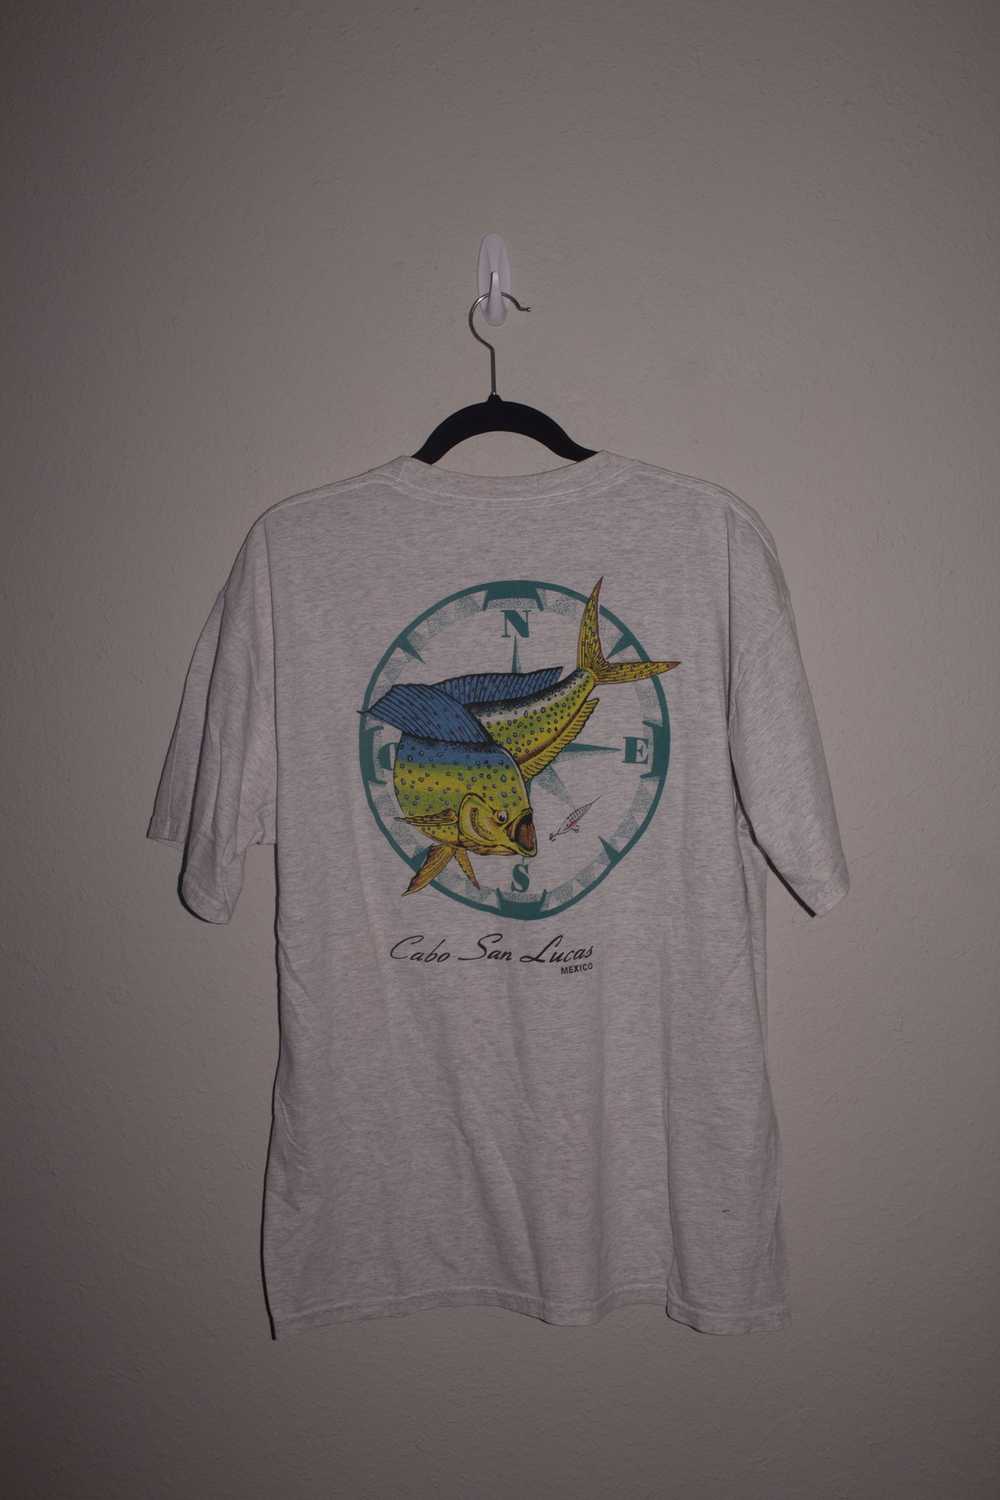 Vintage 90s Cabo Bass Fish T-Shirt - image 1